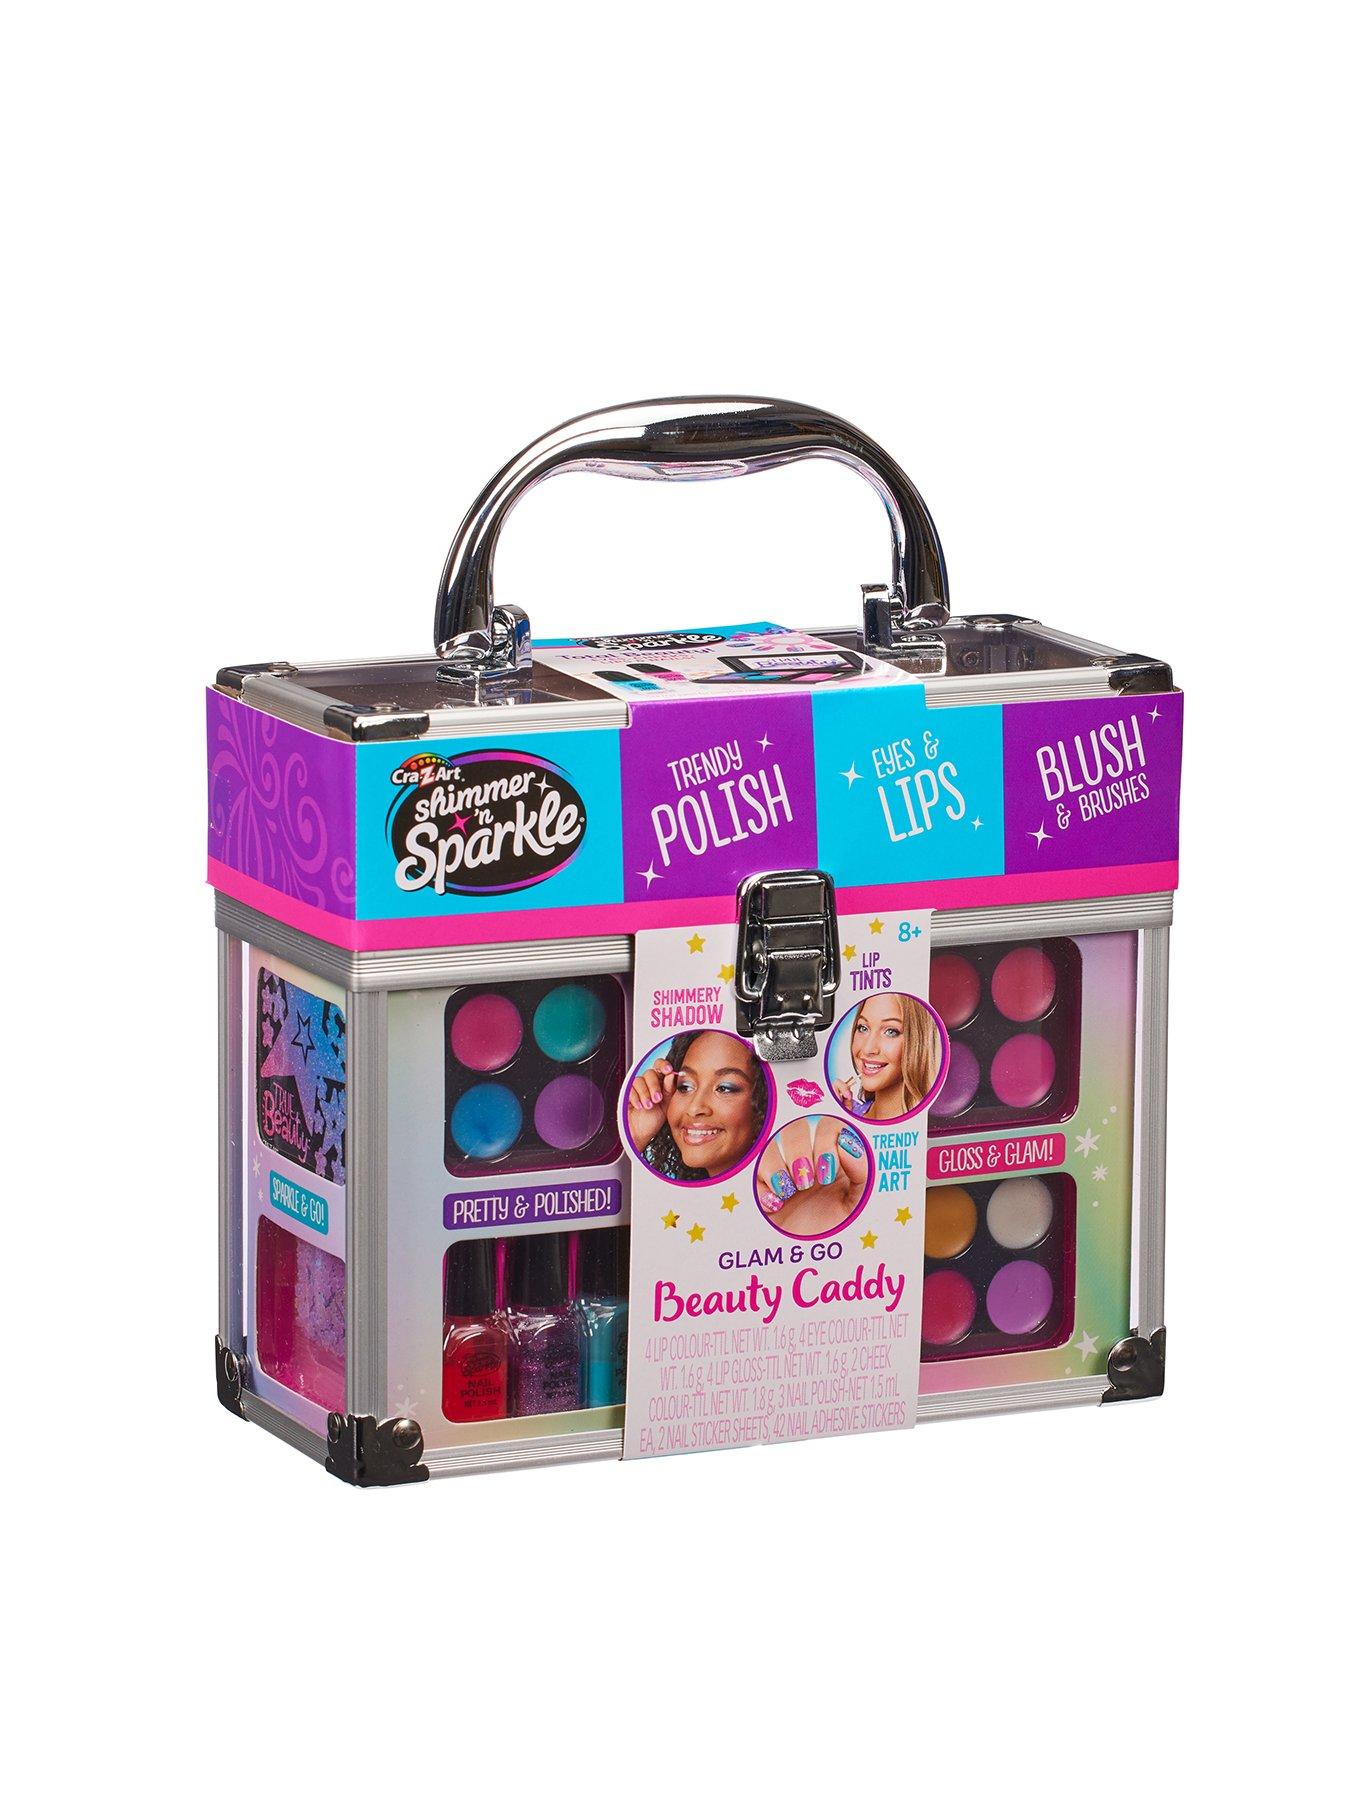 Buy Shimmer 'n Sparkle Glitter and Gem Lip Gloss Lockets